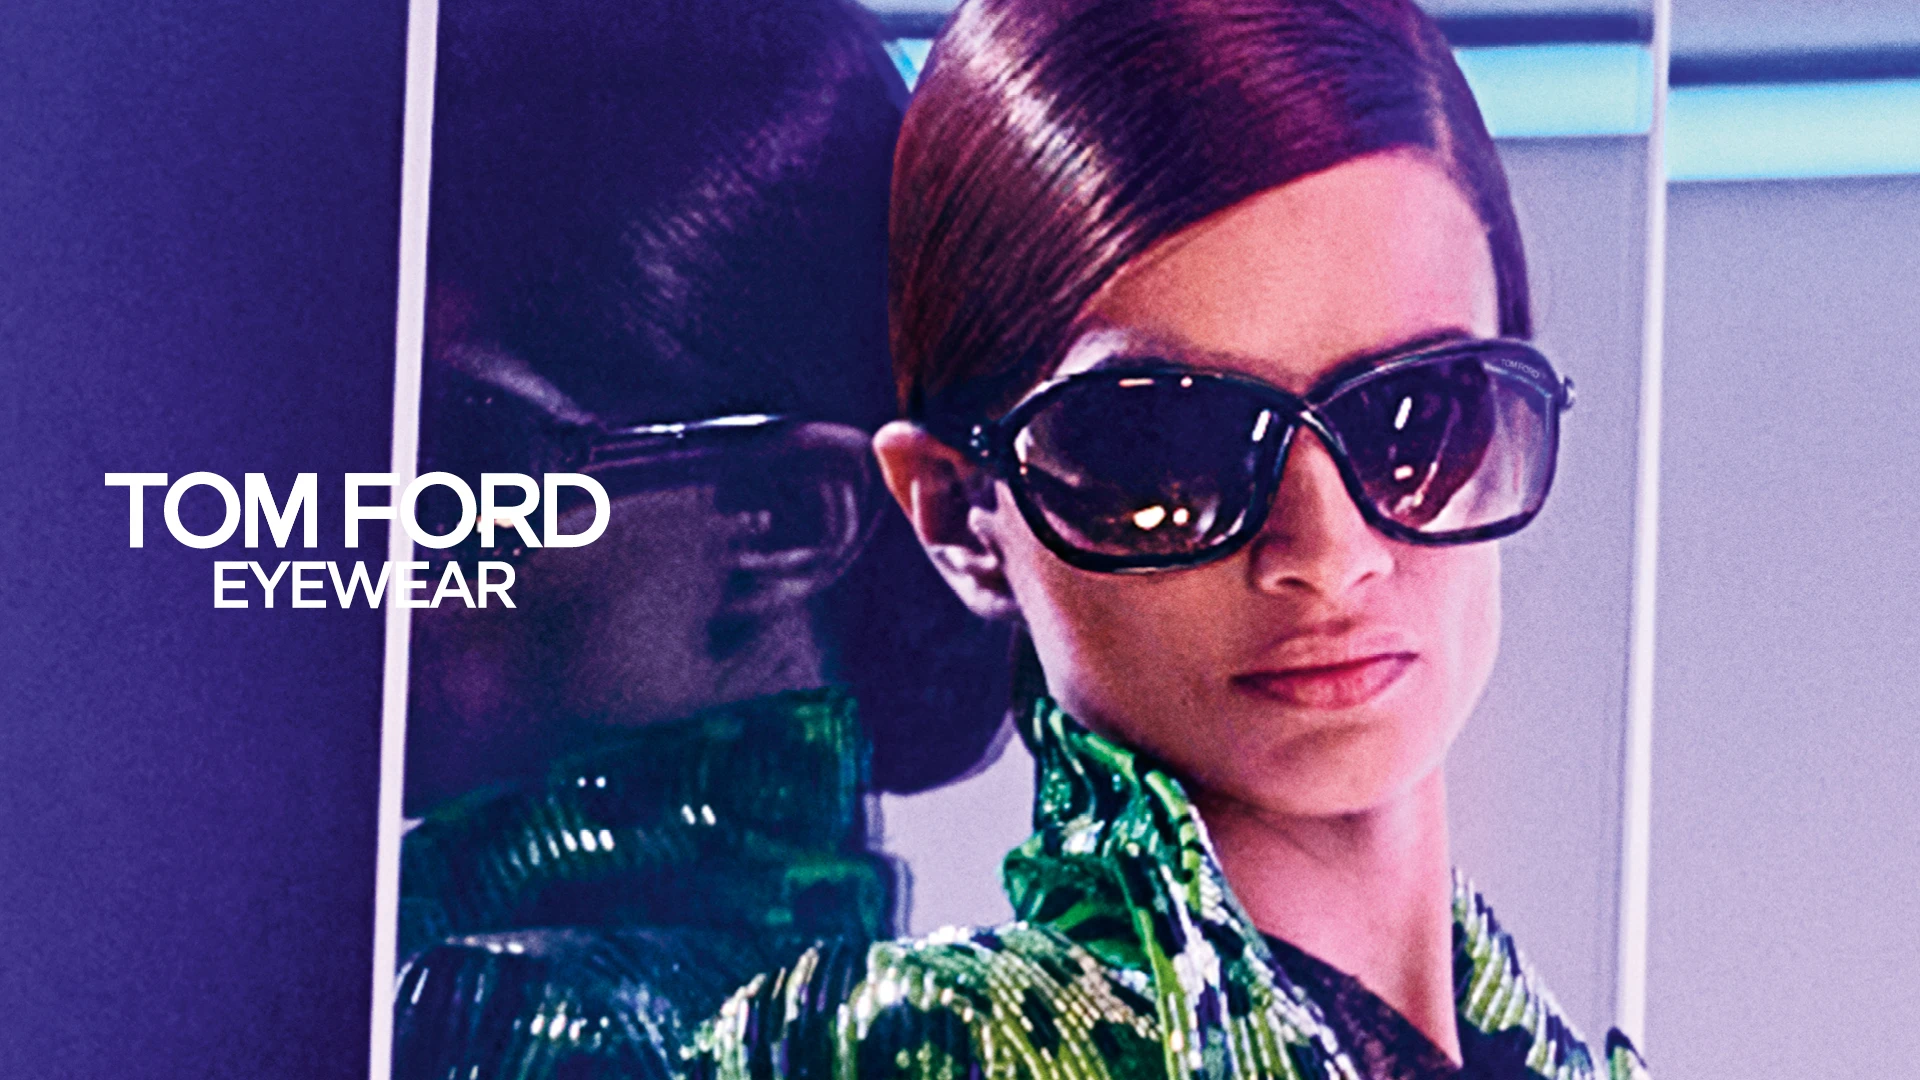 A model wearing Tom Ford sunglasses